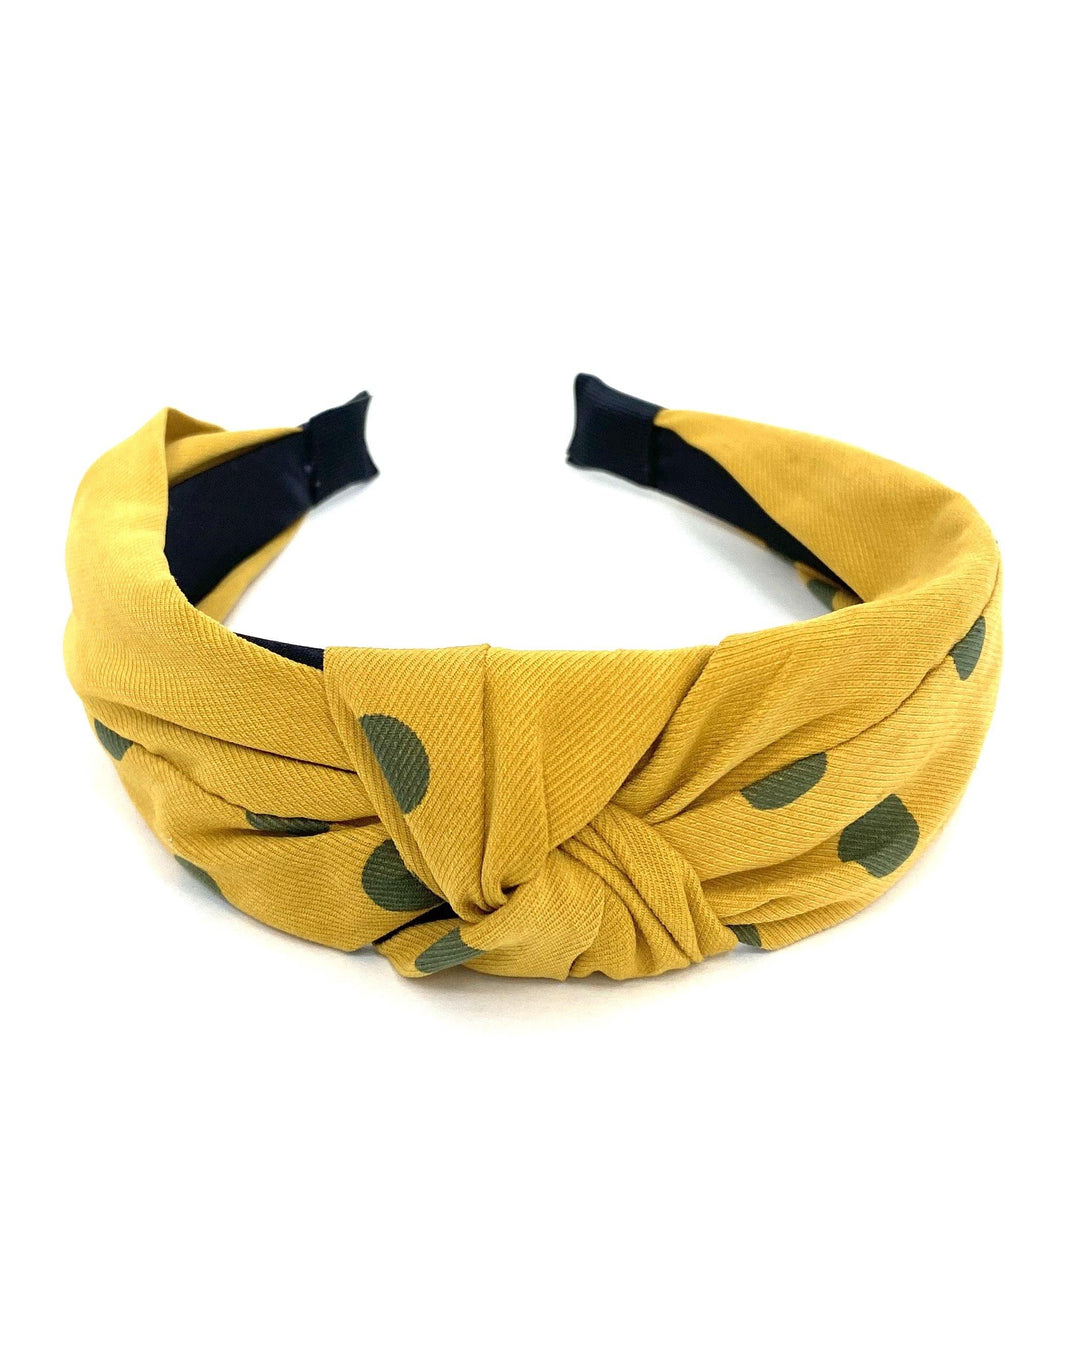 Mustard Yellow Polka Dot Headband - The Fashion Foundation - {{ discount designer}}